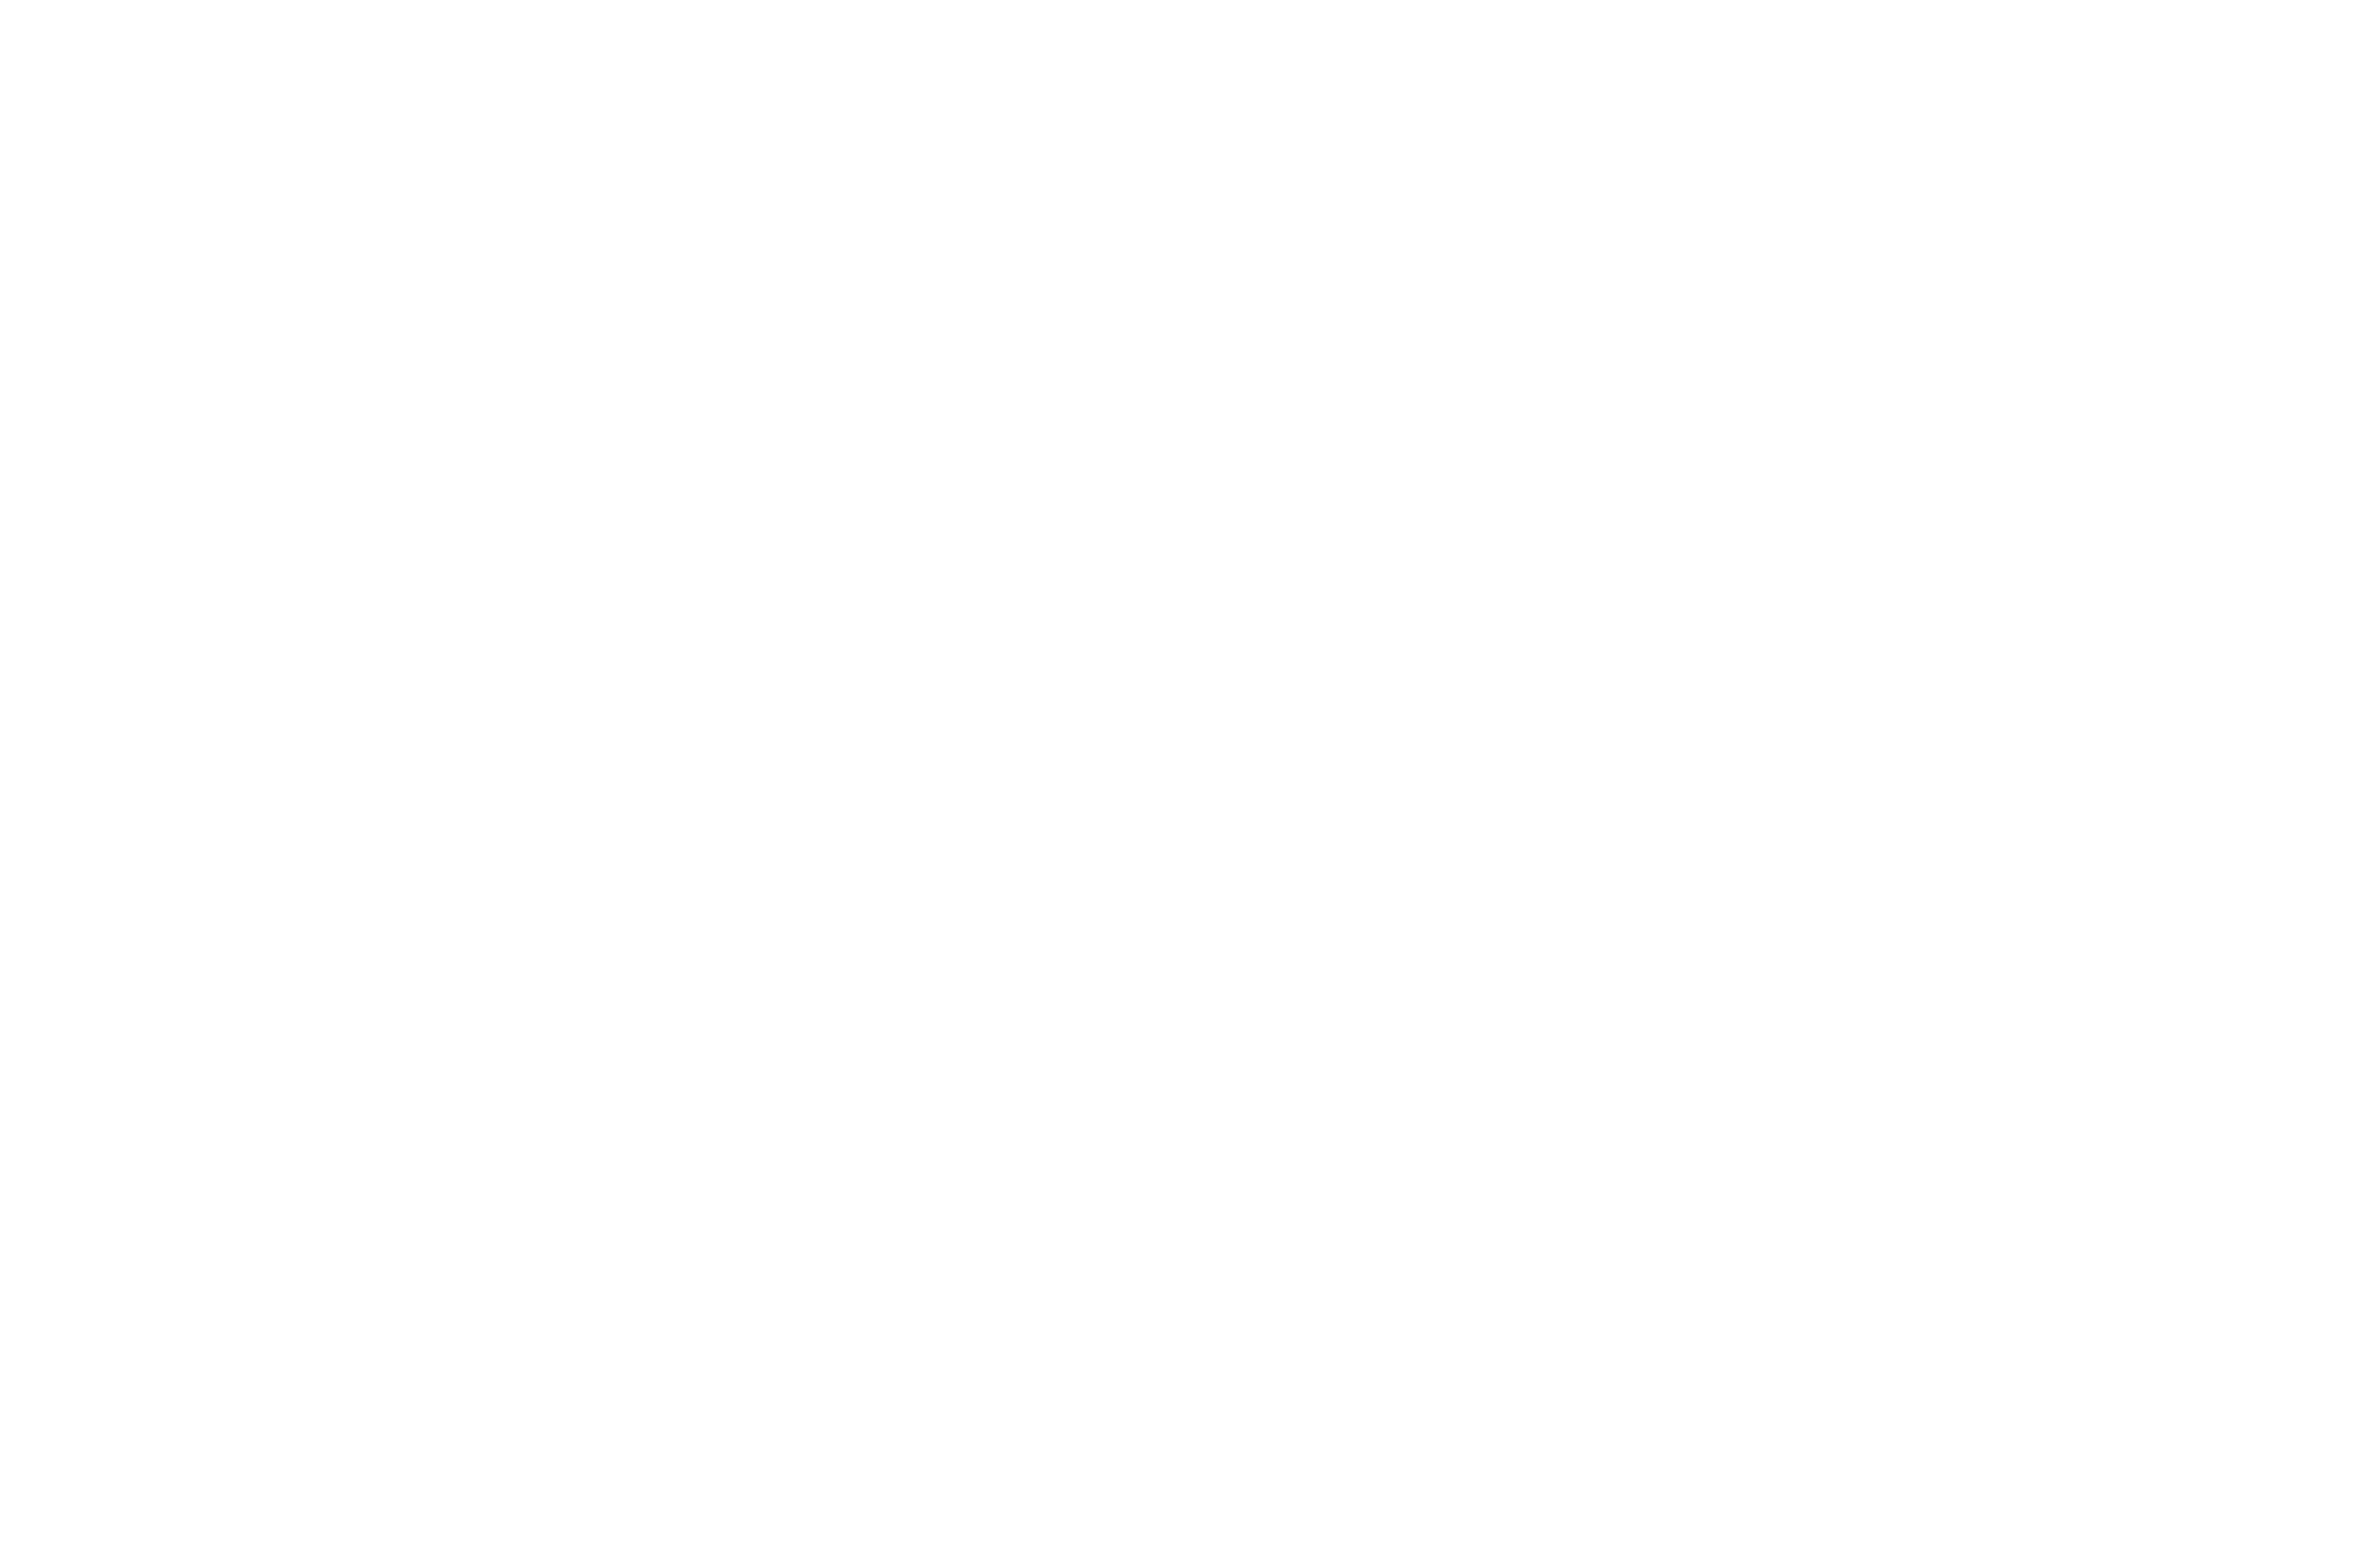 Theater Arts Center Rentals